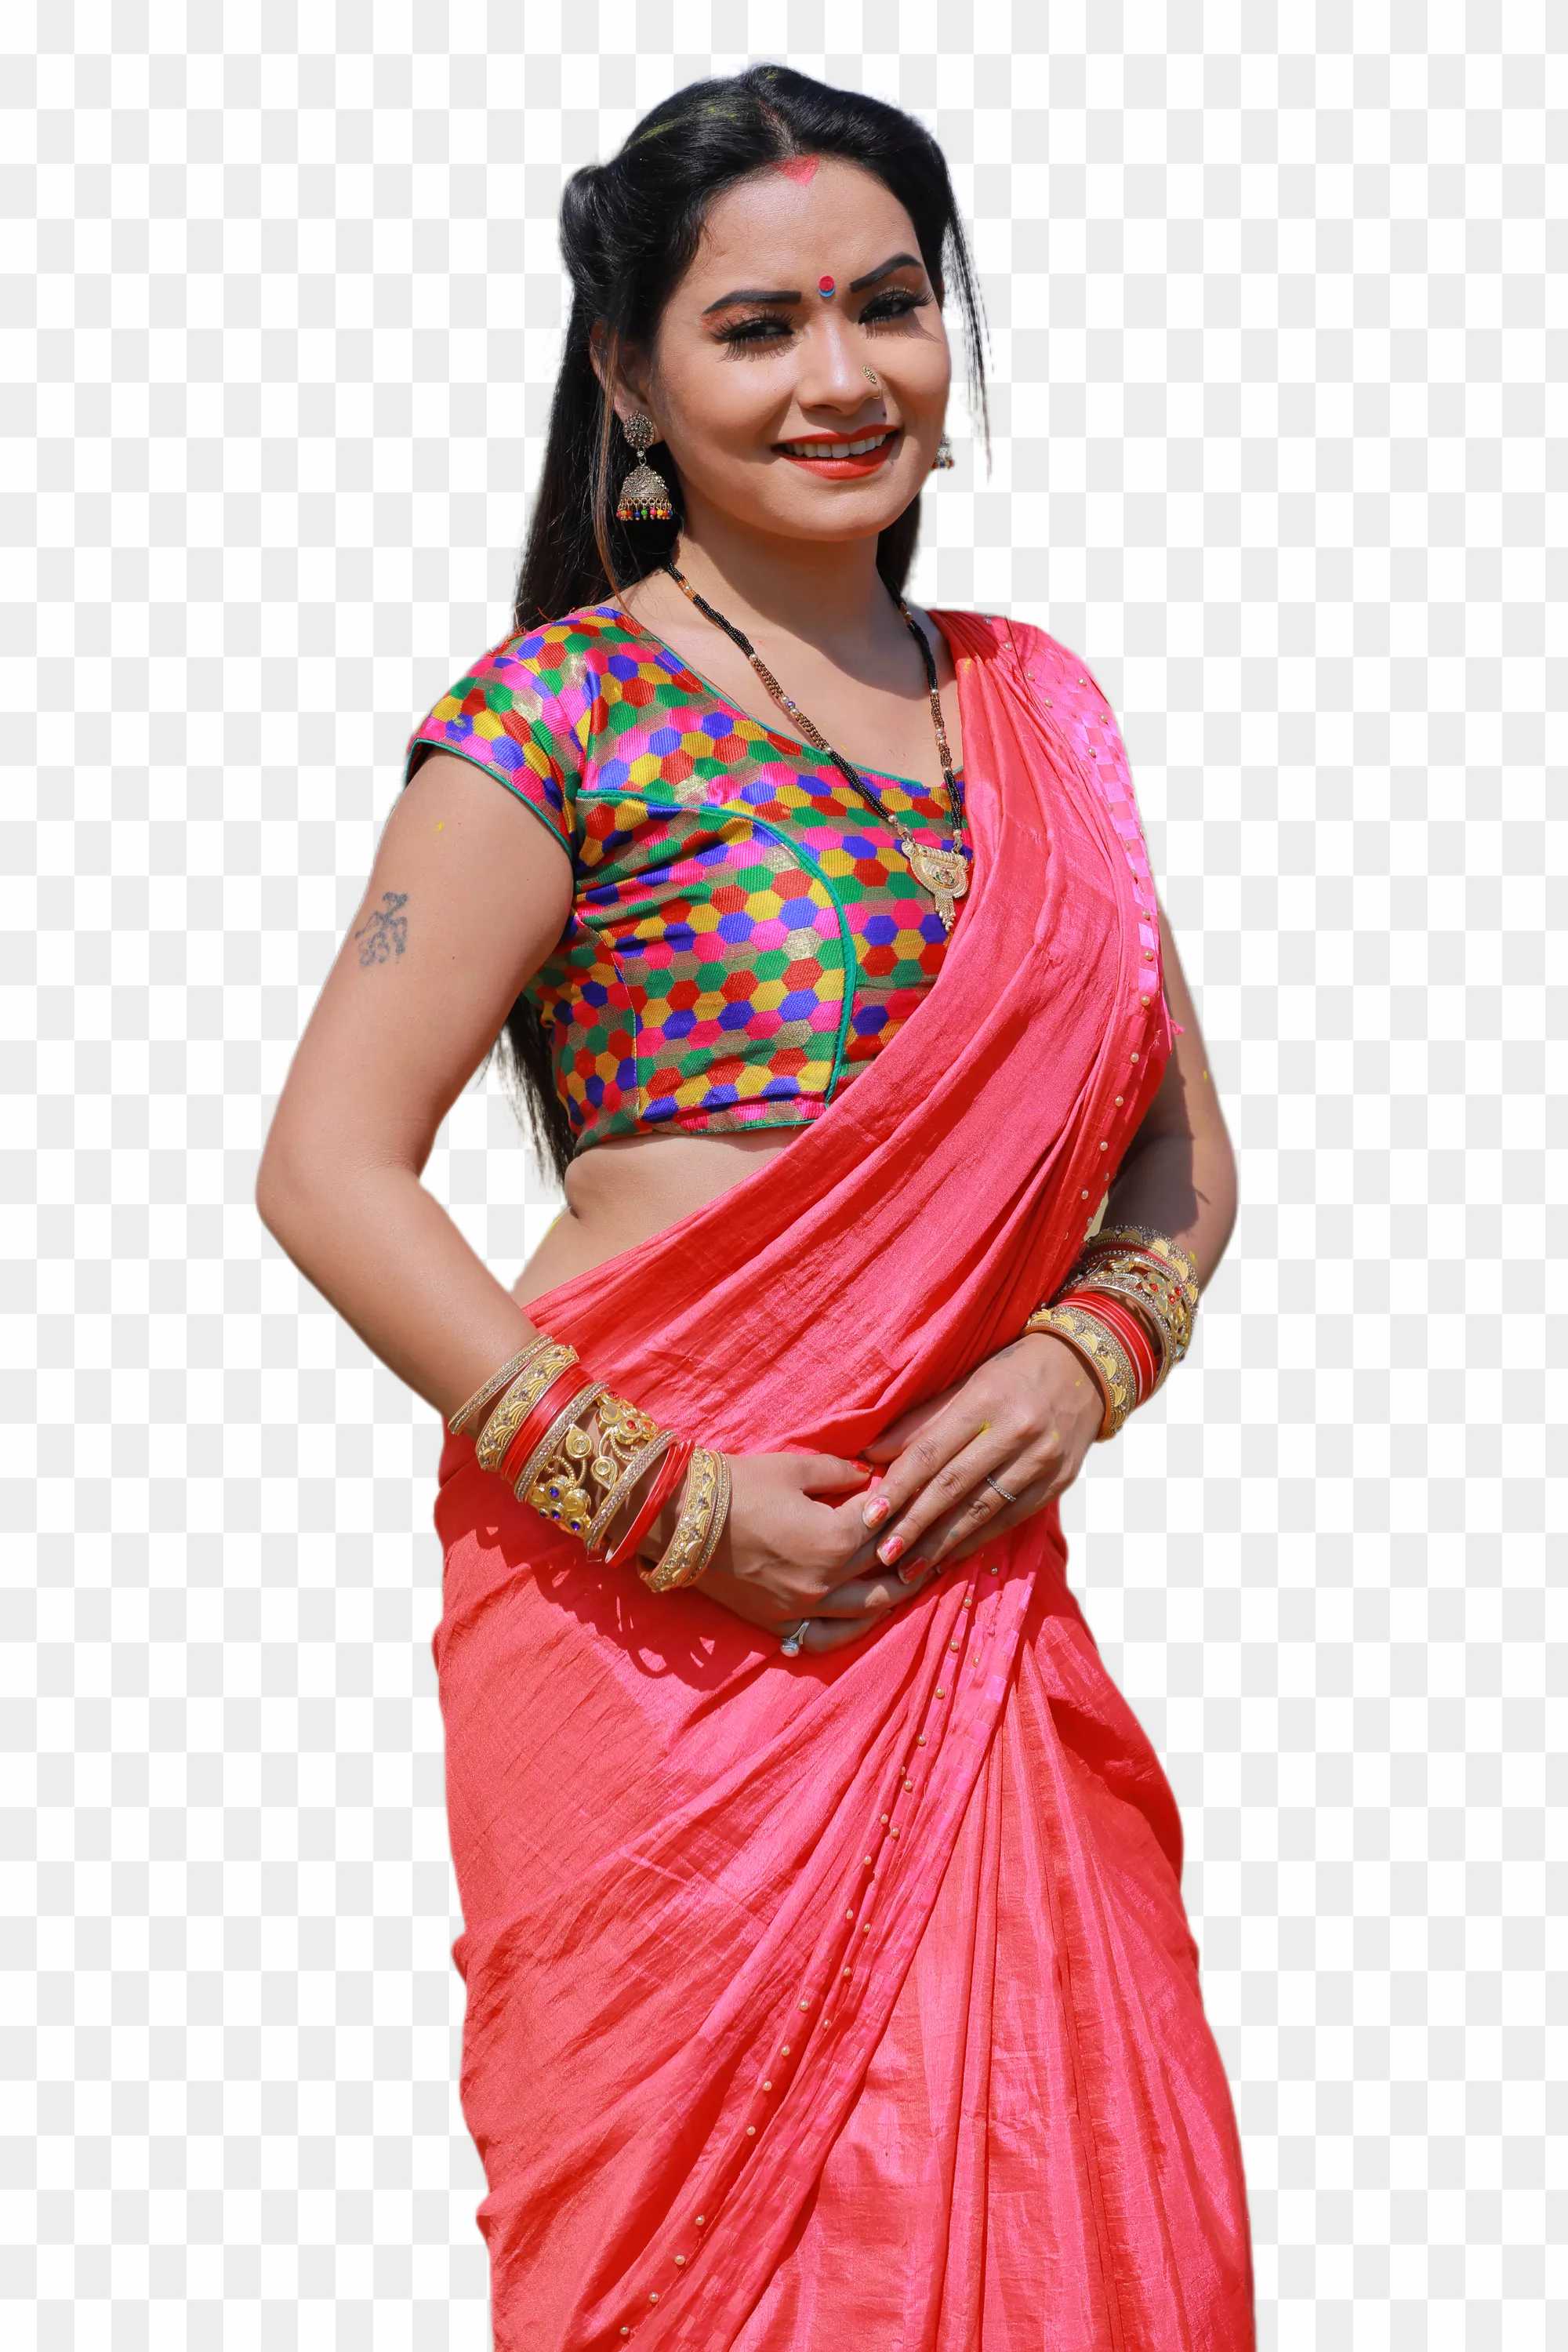 New bhojpuri actress png